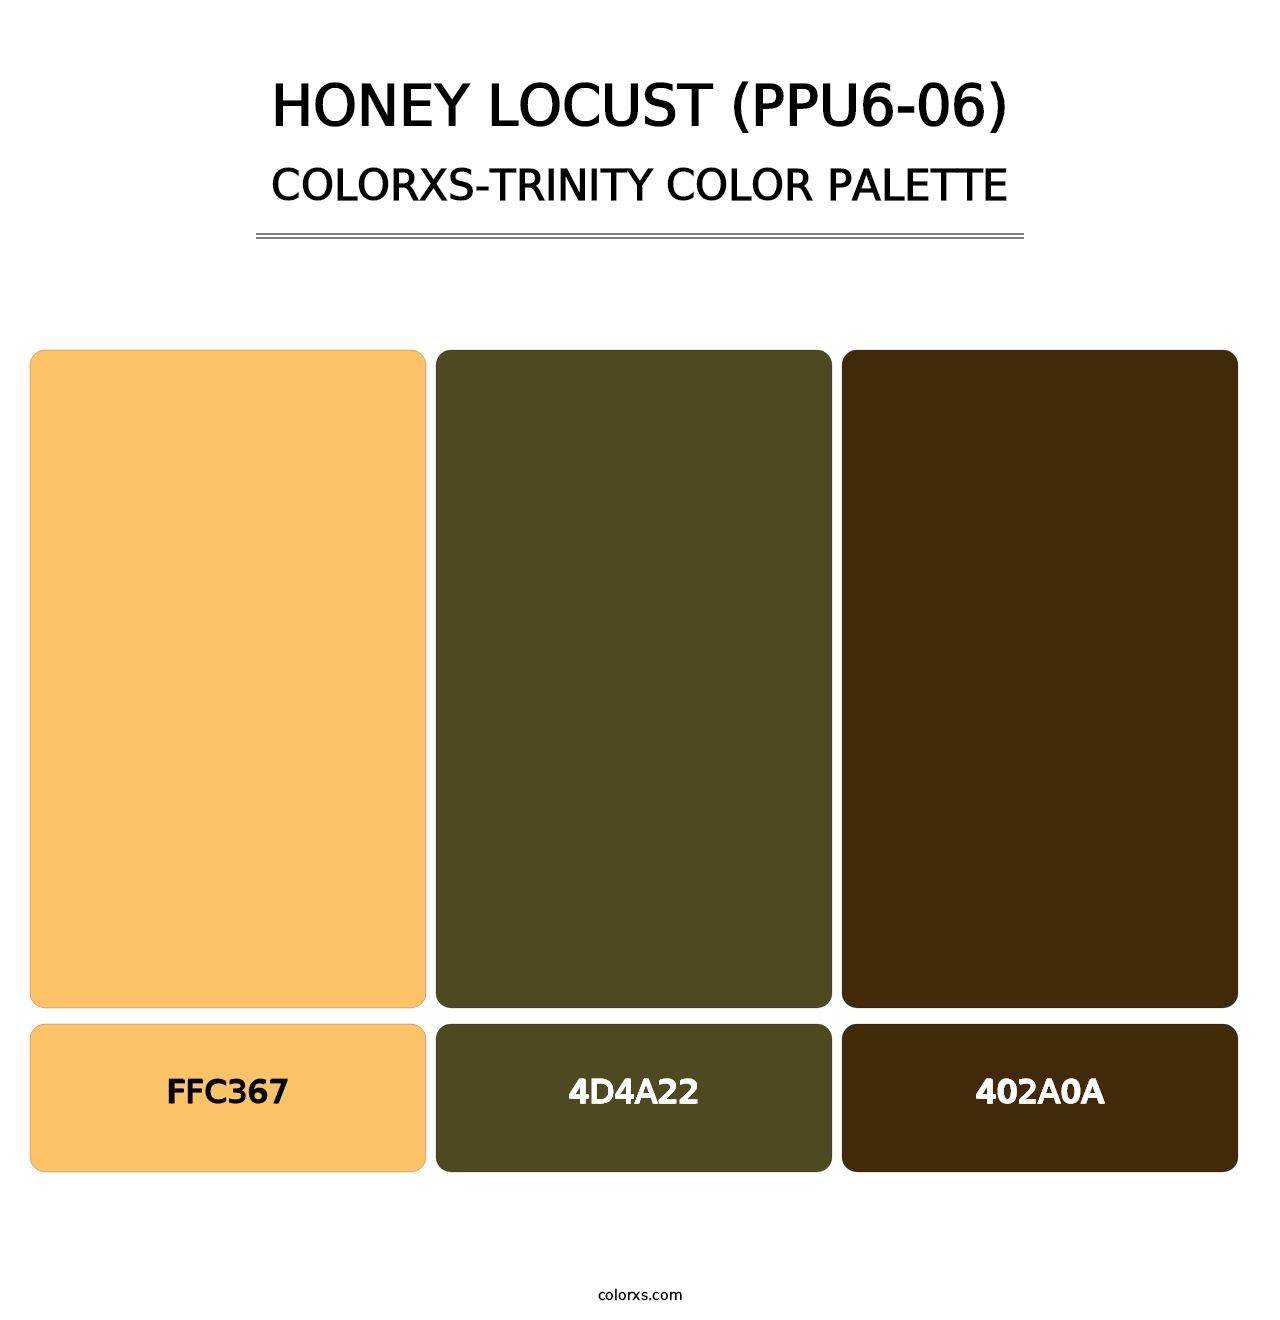 Honey Locust (PPU6-06) - Colorxs Trinity Palette